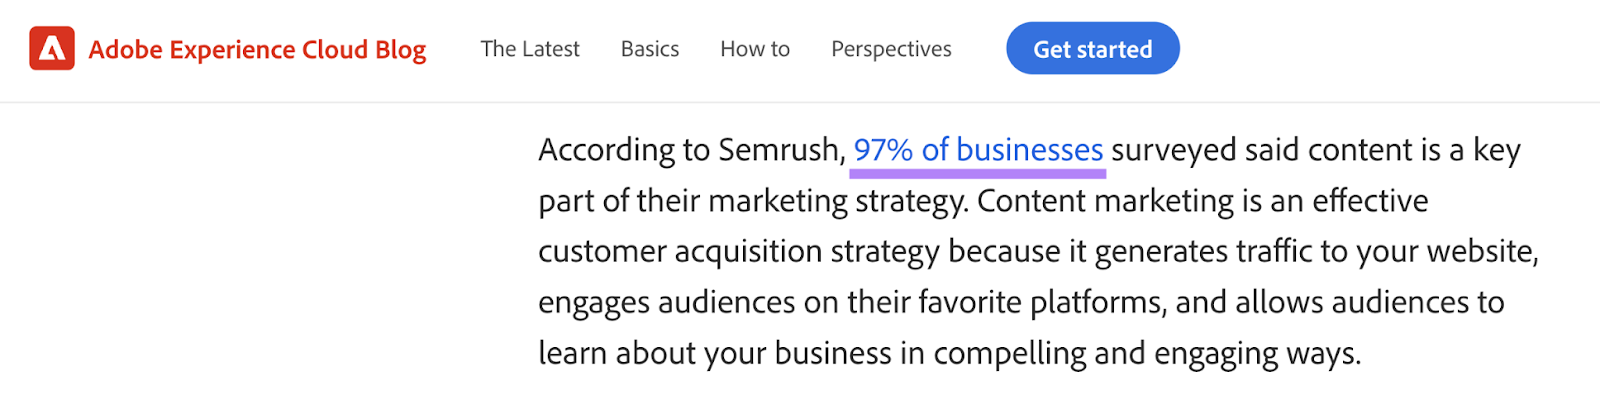 Adobe's blog links to Semrush's content marketing study